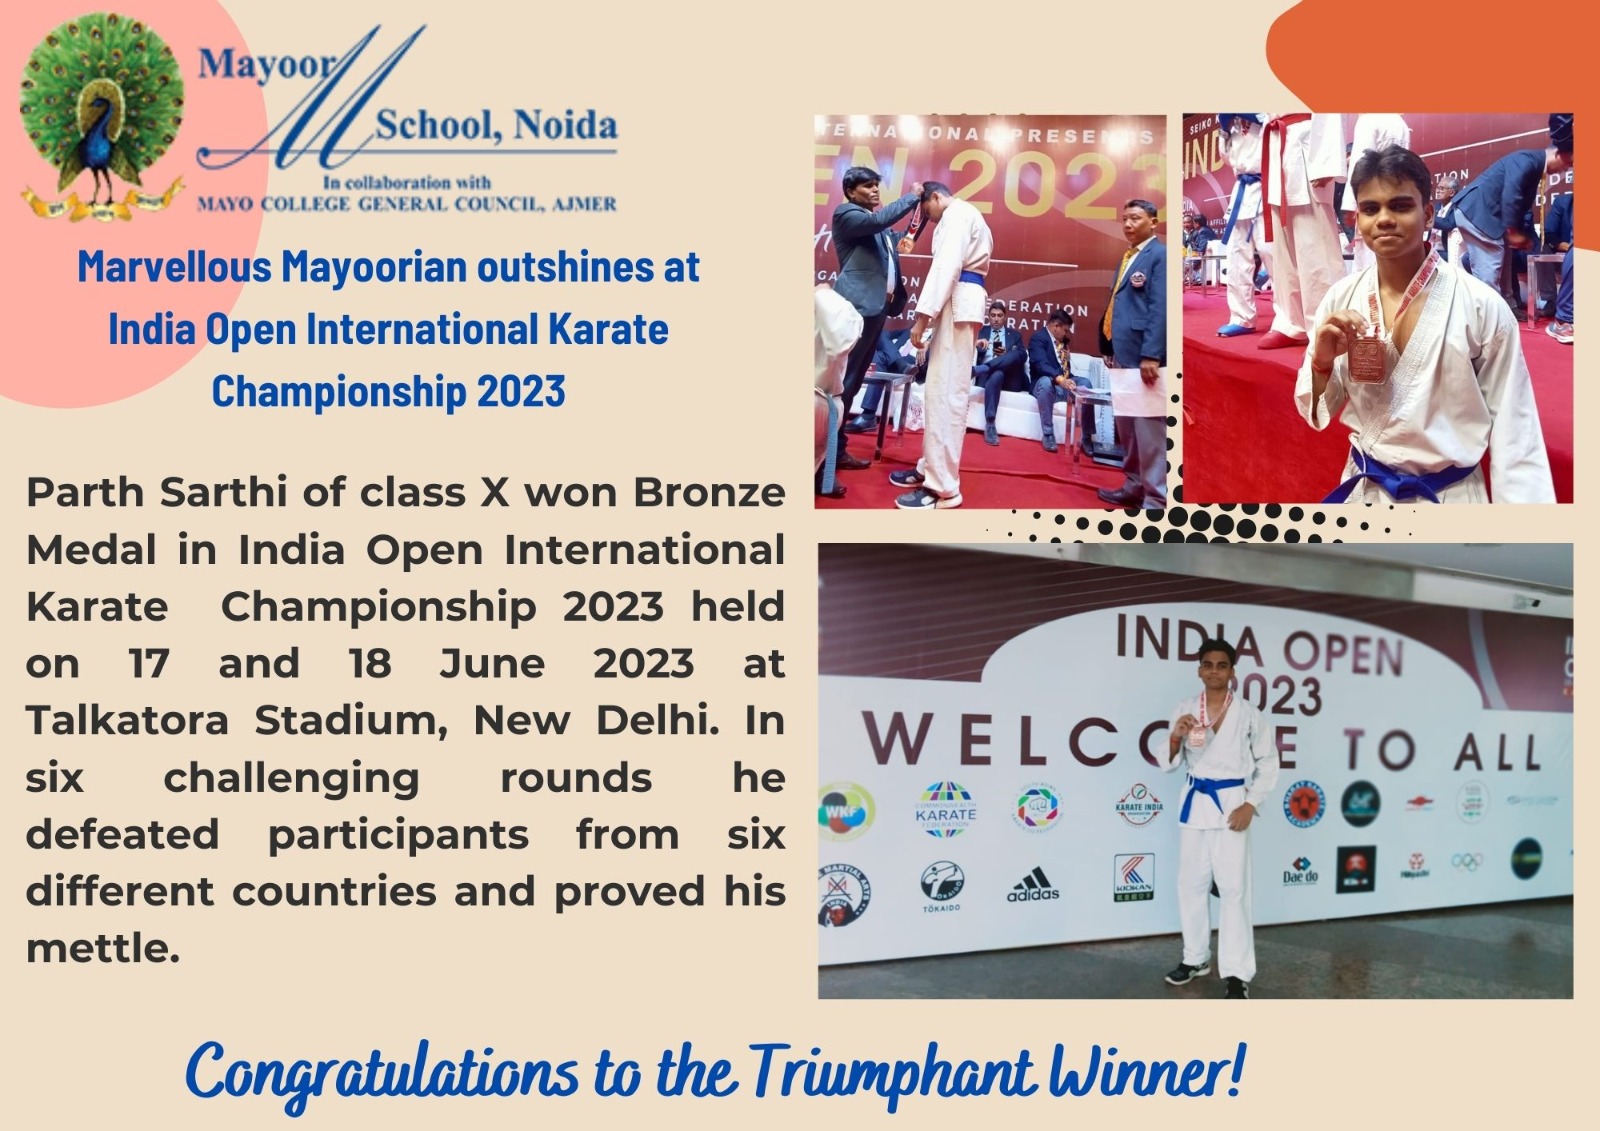 Mayoorian at India Open International Karate Championship